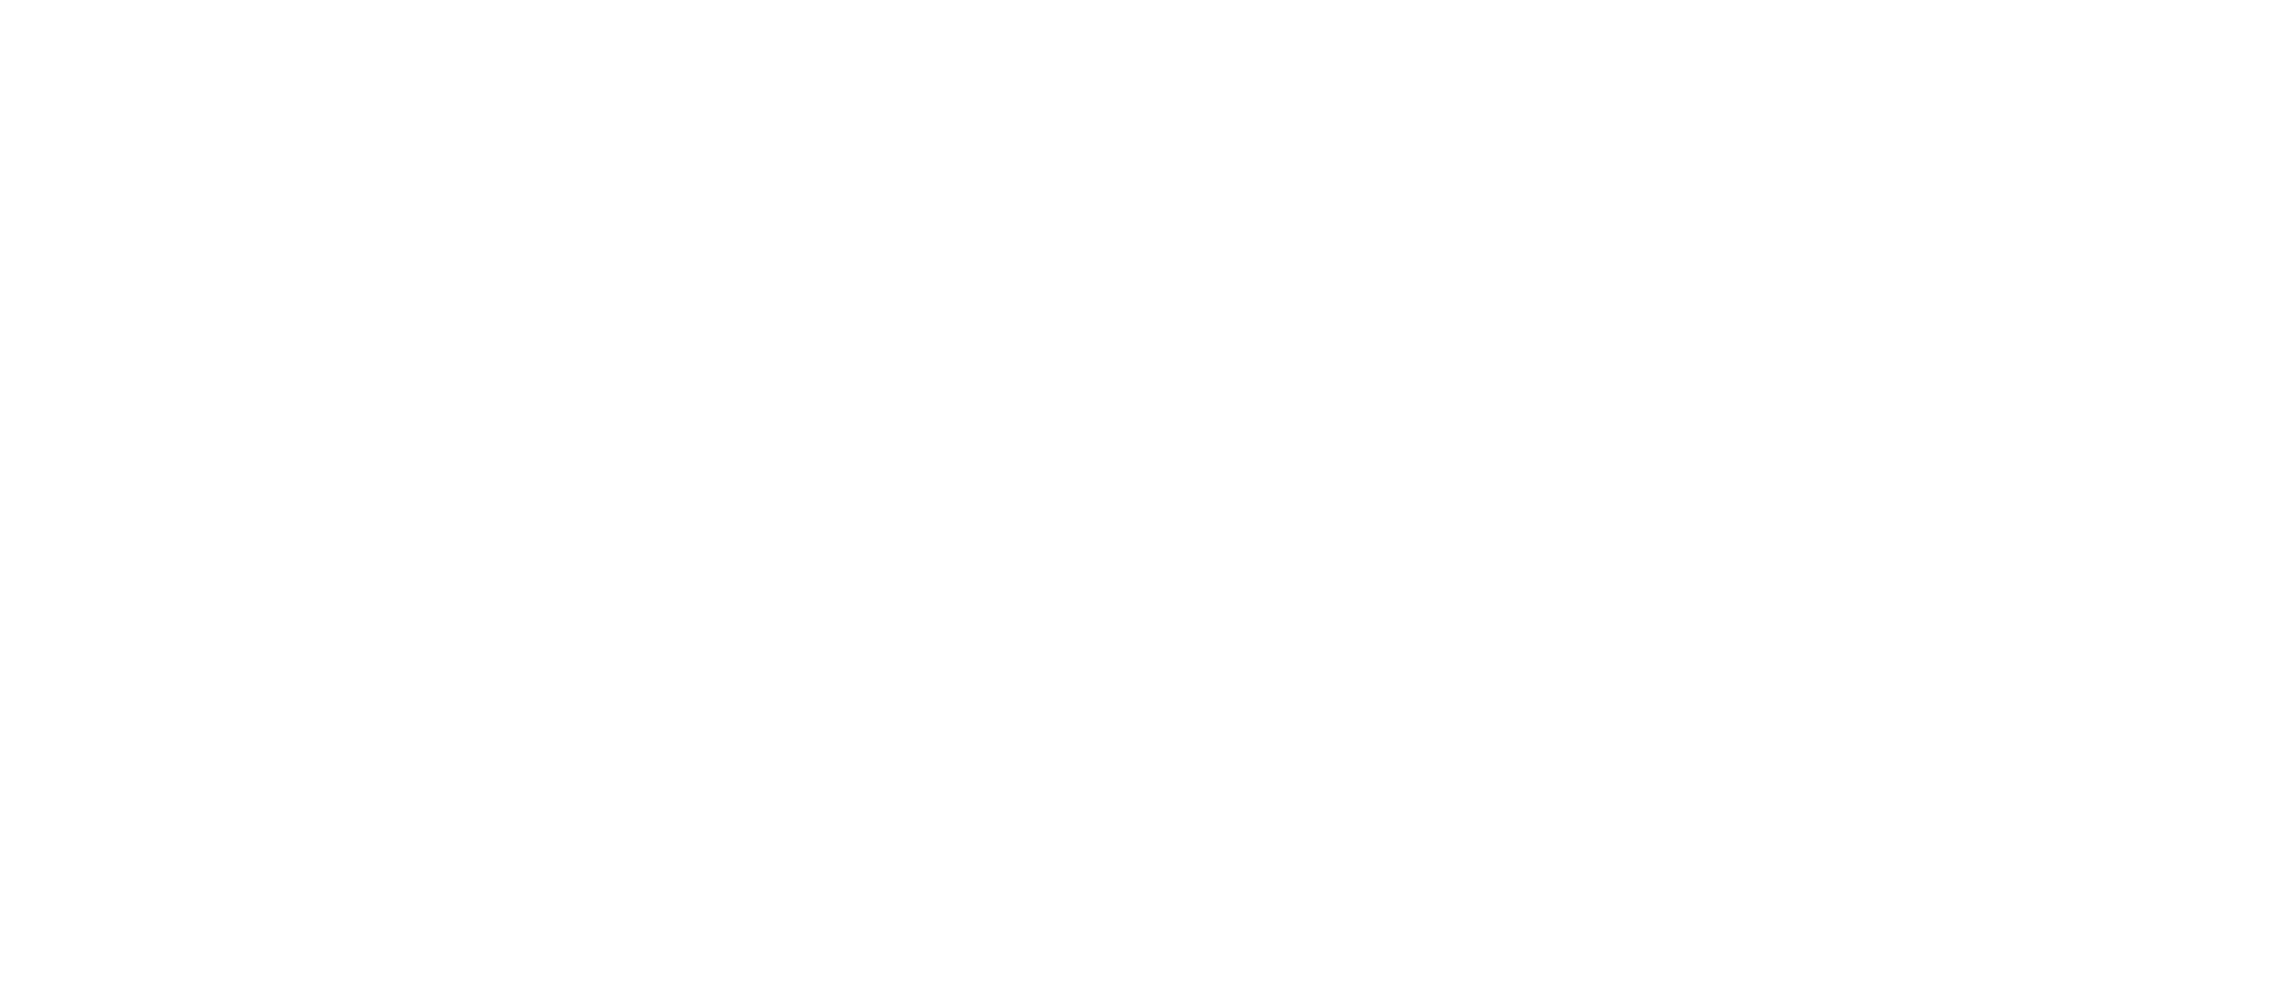 Holiday Options